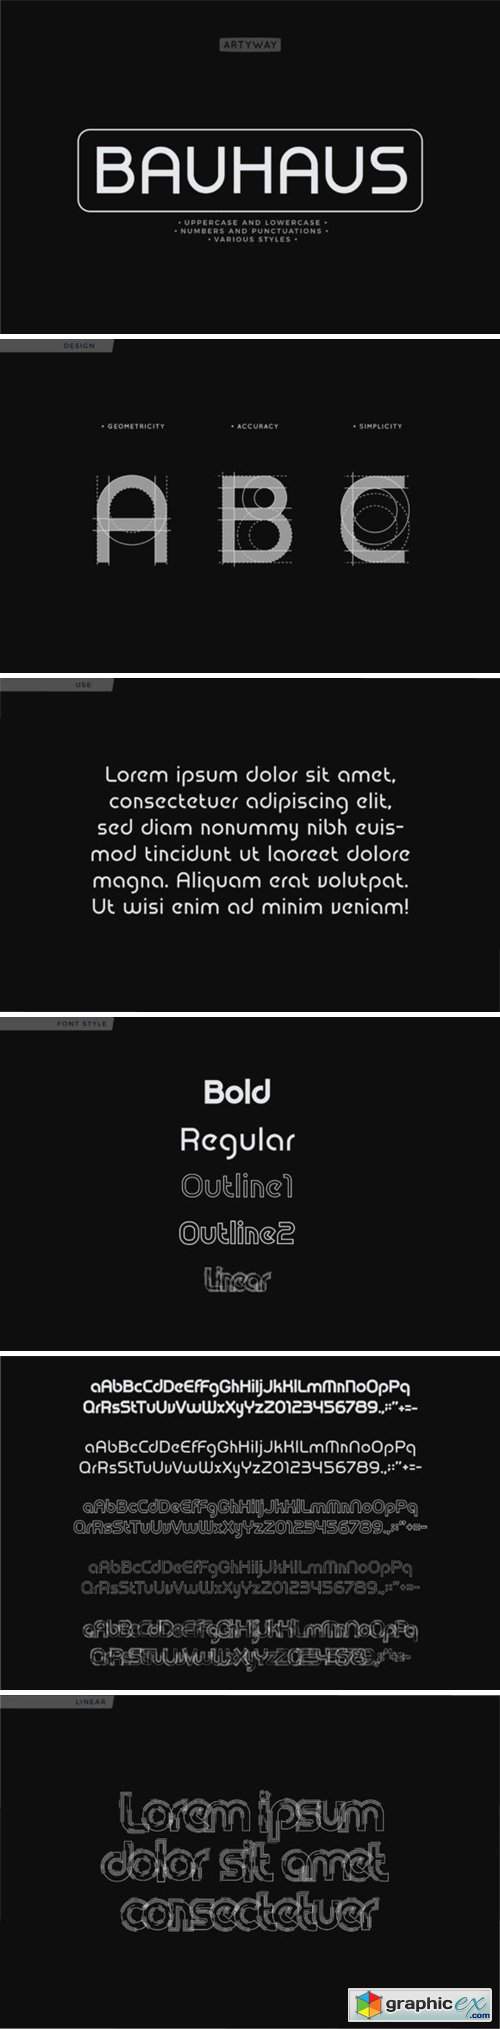  Bauhaus Font 